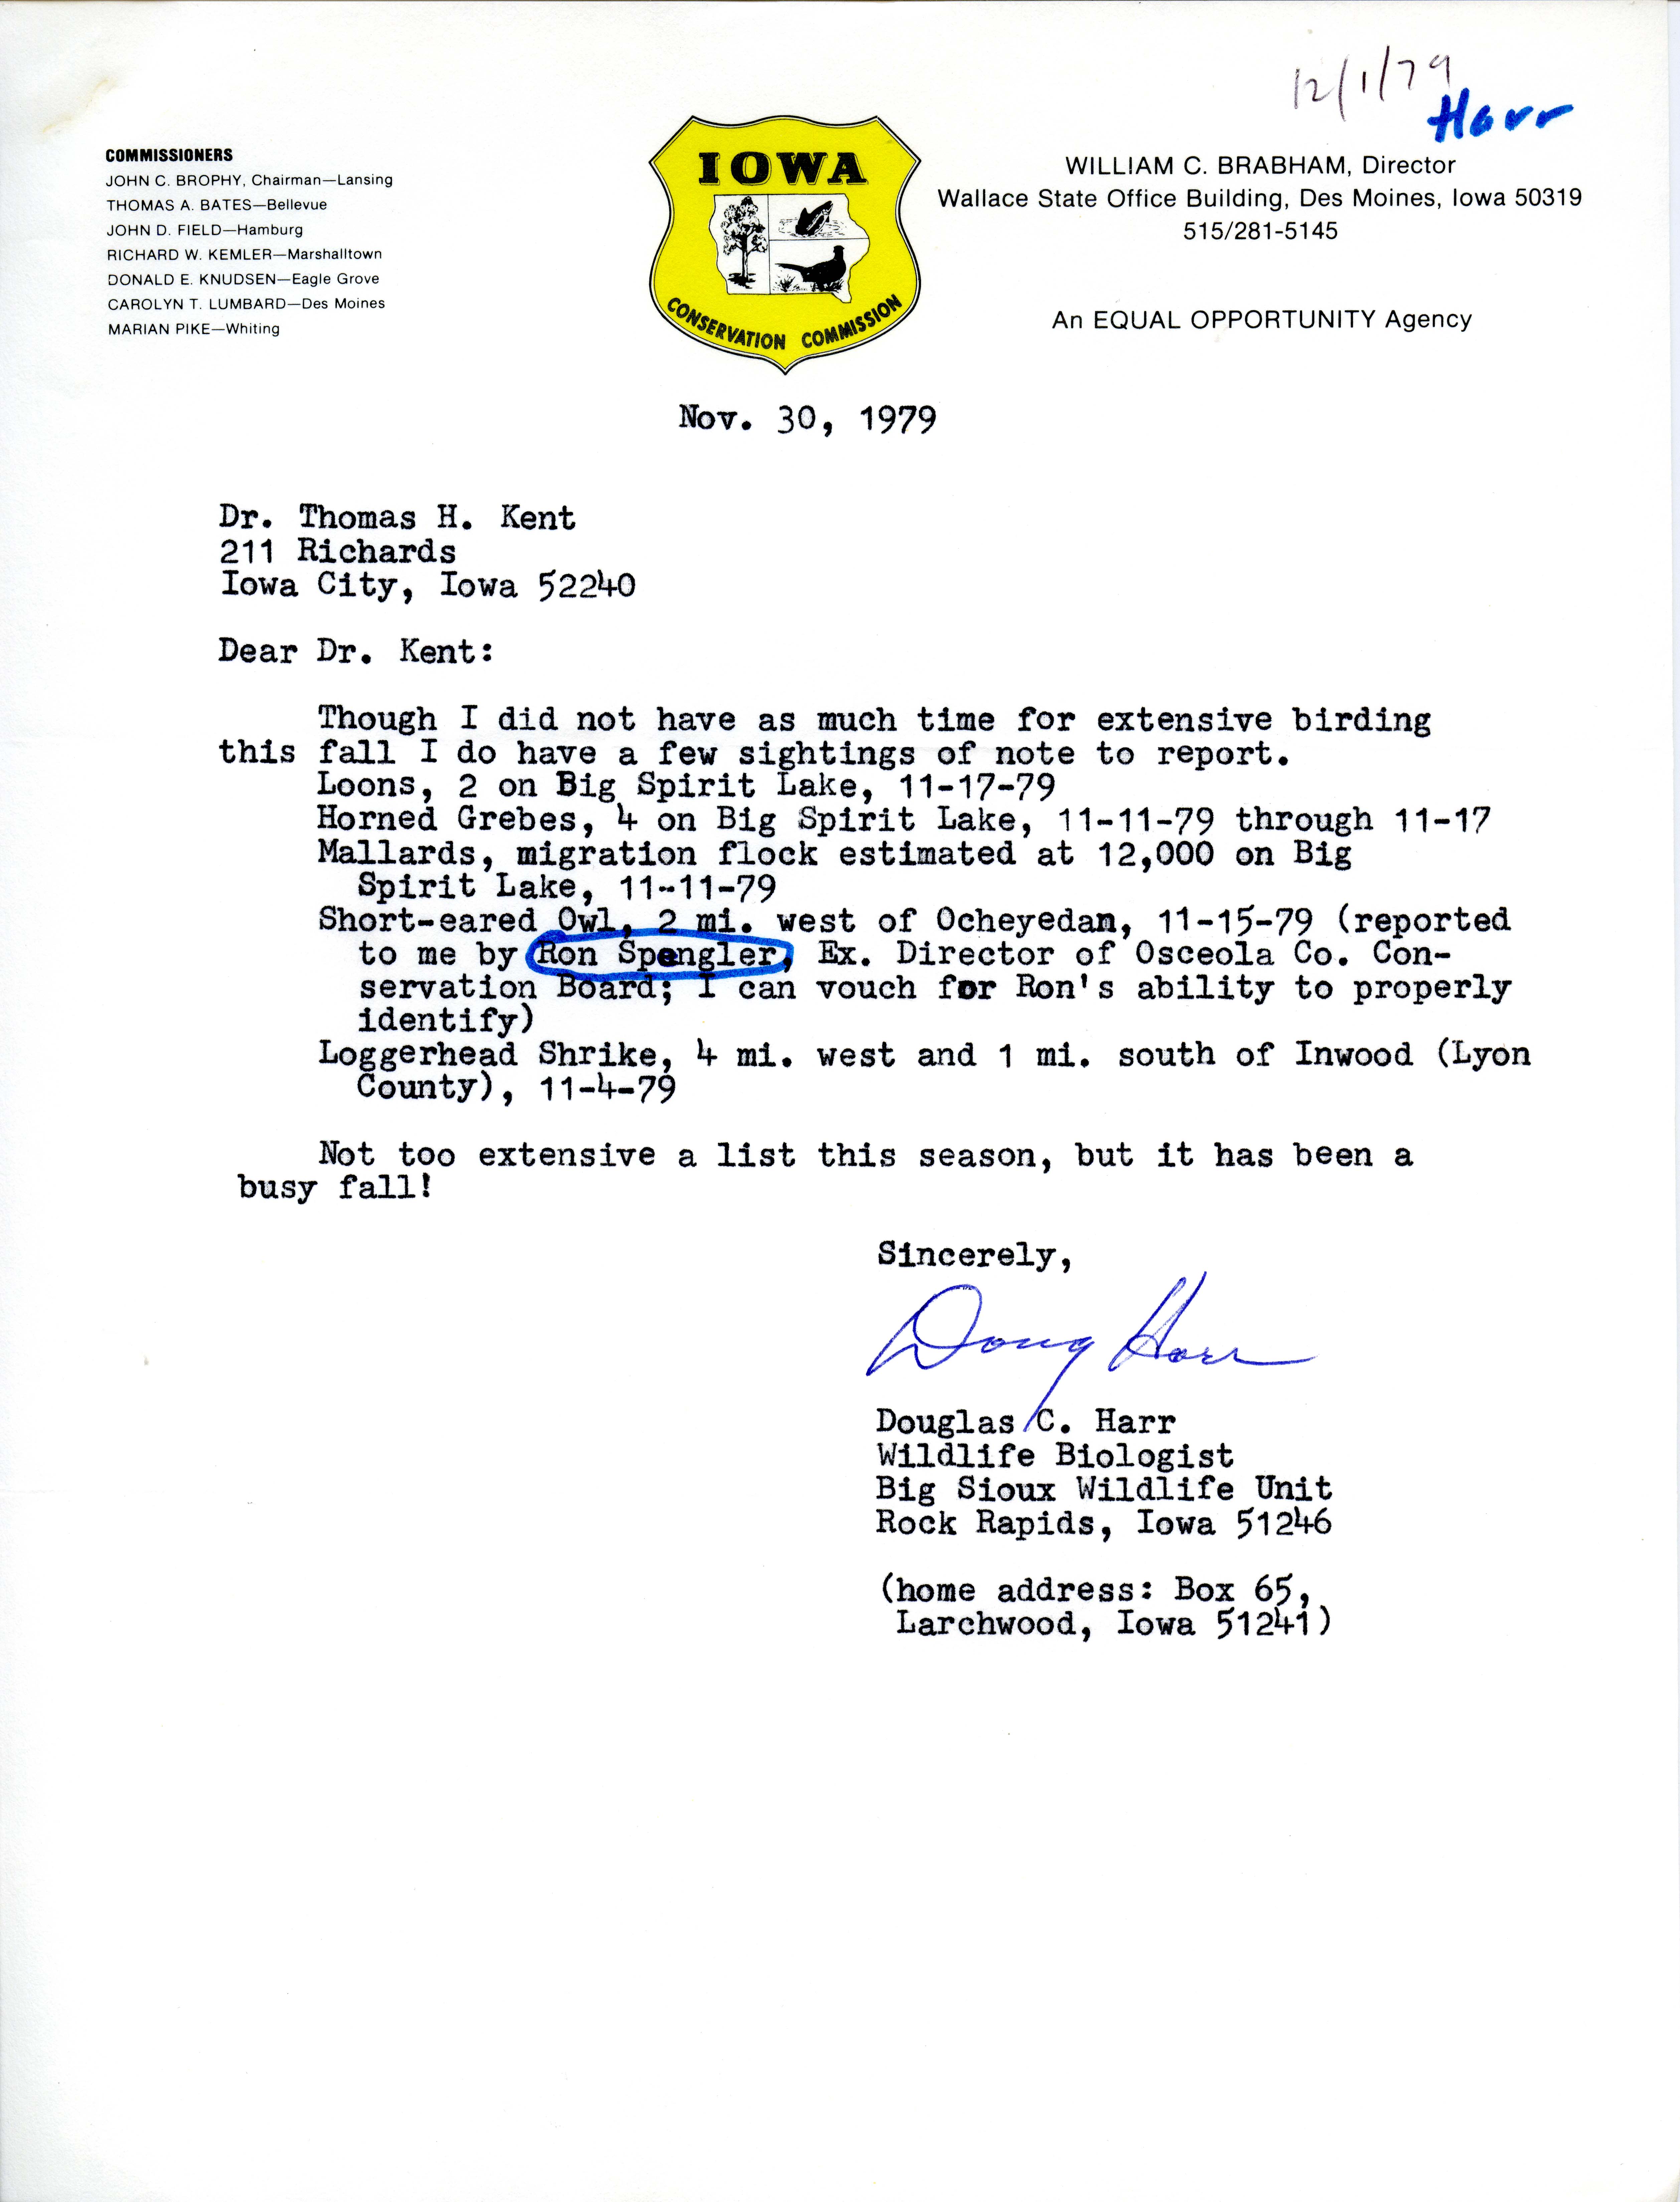 Douglas C. Harr letter to Thomas H. Kent regarding bird sightings, November 30, 1979